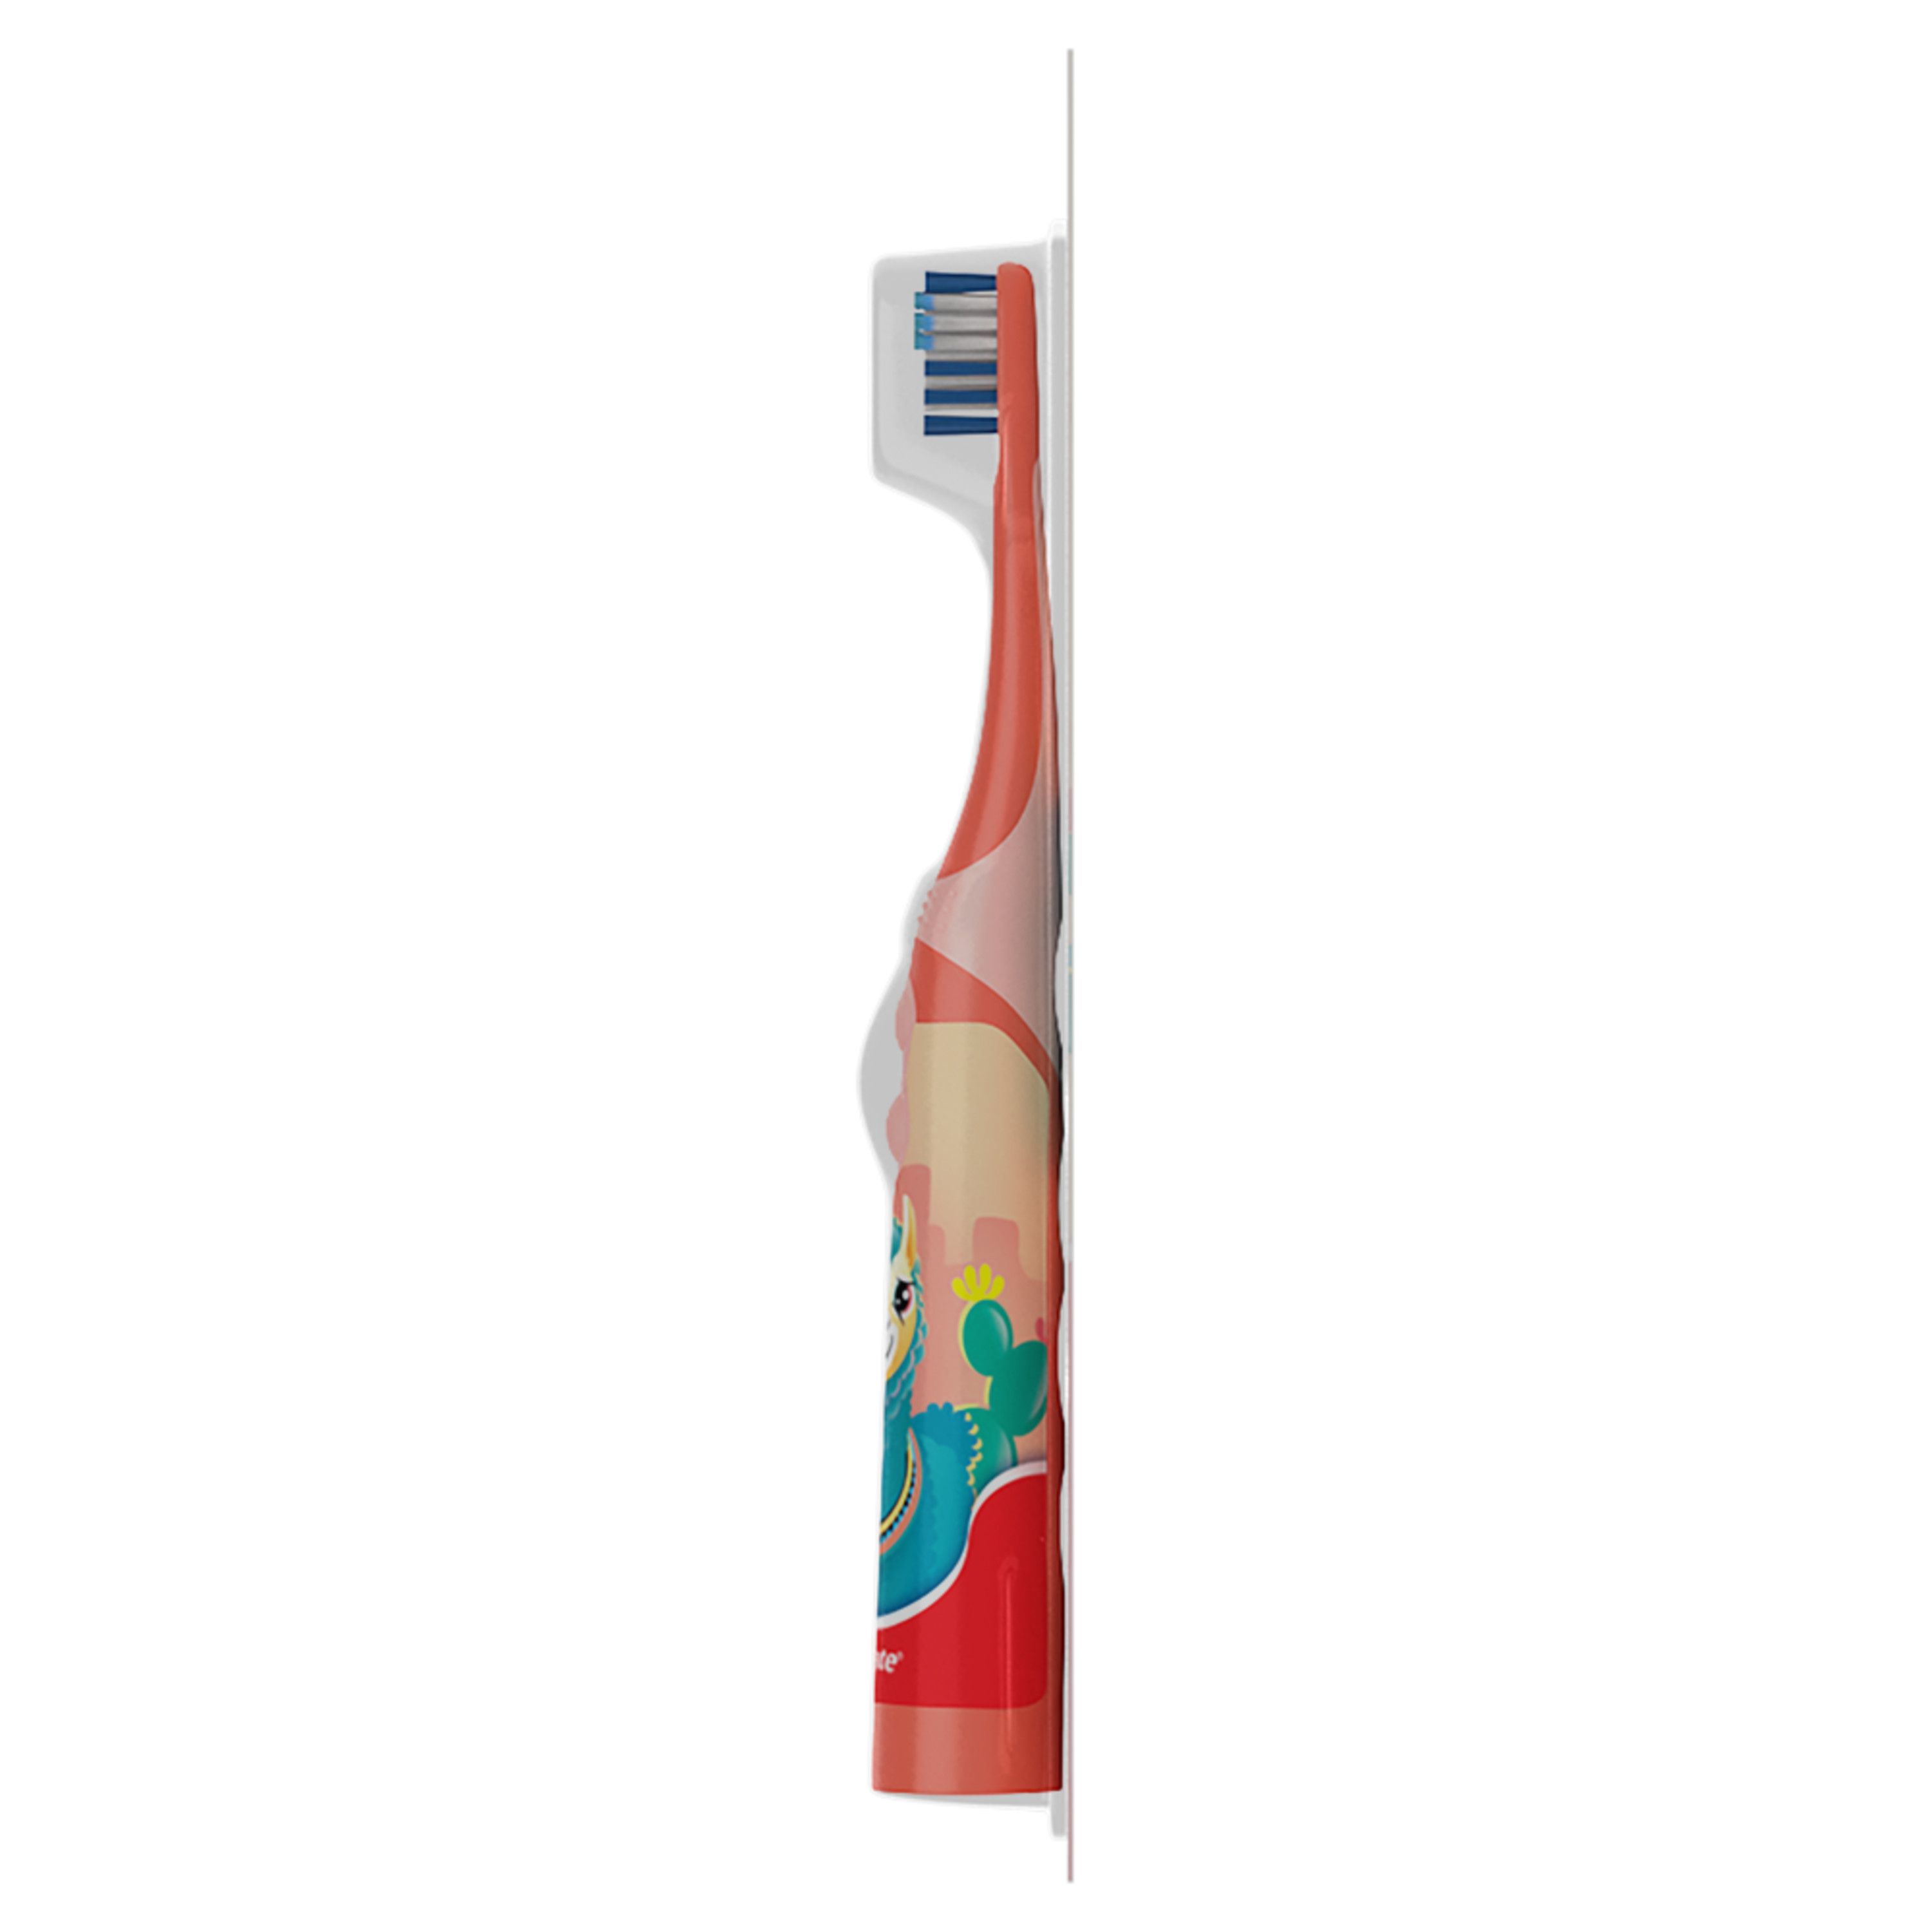 Colgate Kids Battery Toothbrush, Llama Toothbrush, 1 Pack - image 4 of 9